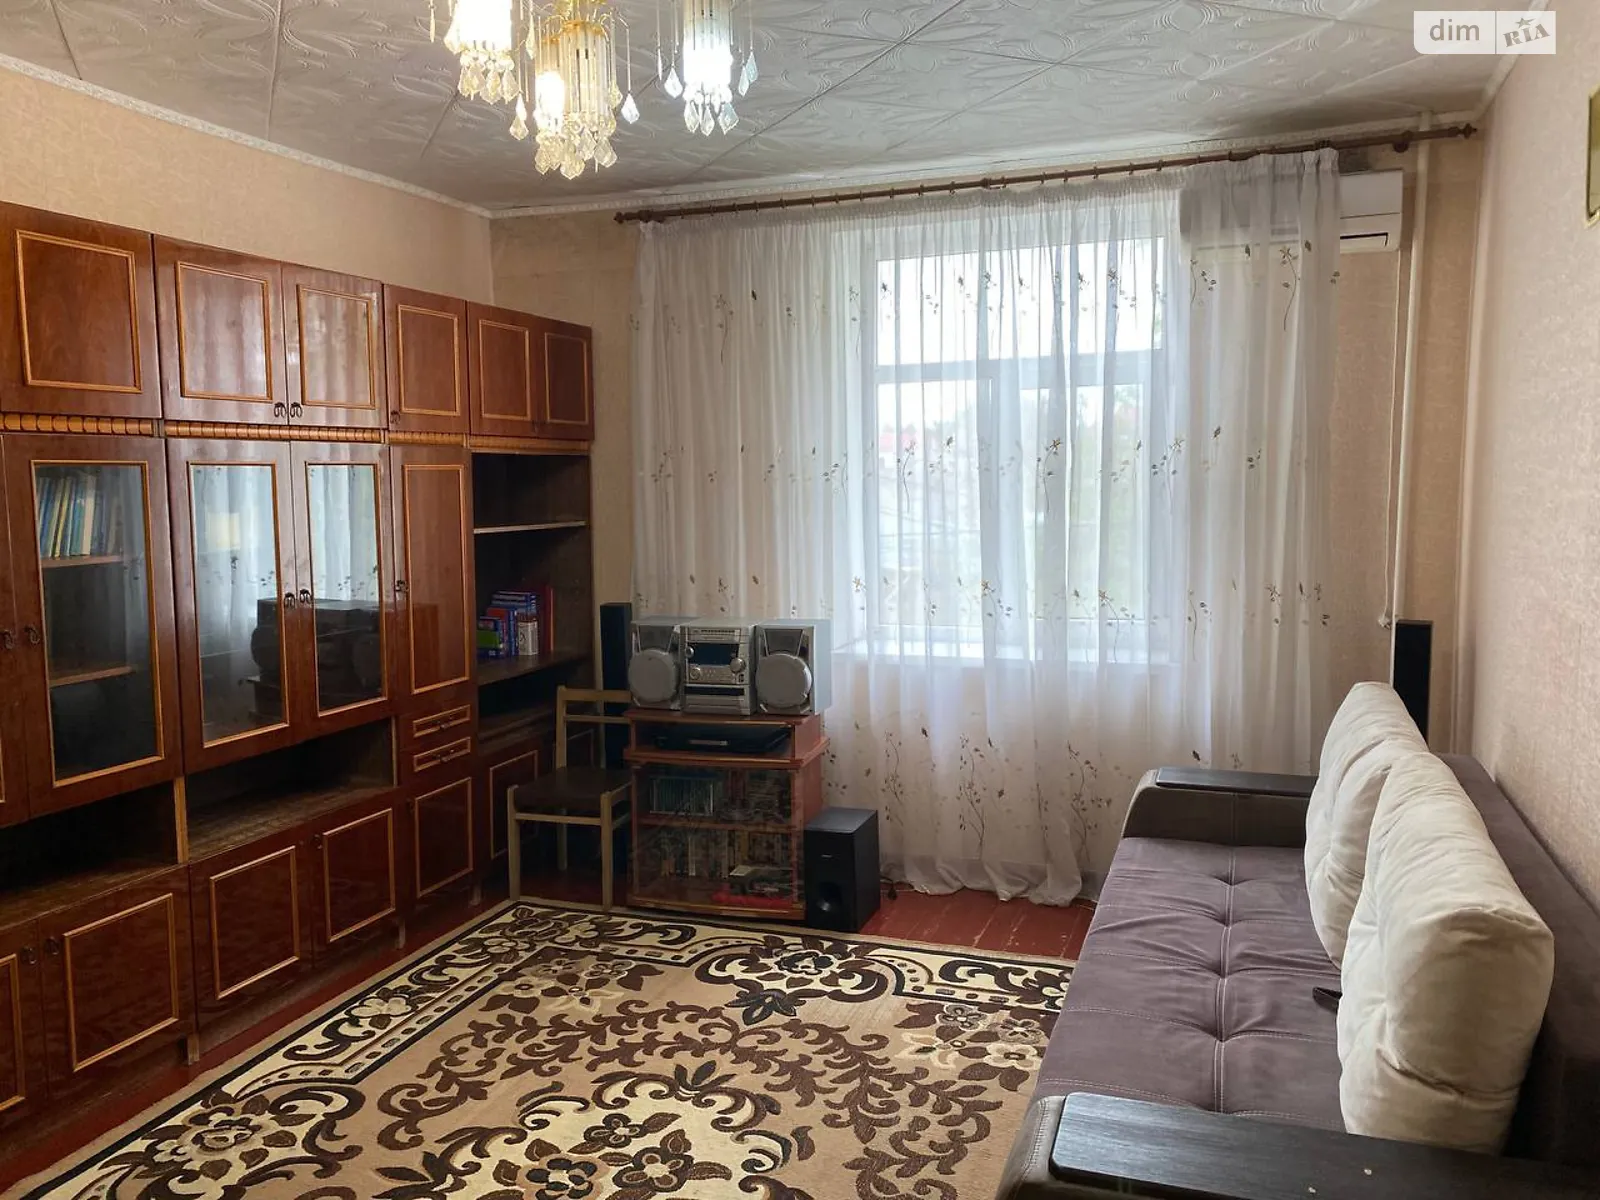 Продается комната 39 кв. м в Одессе, цена: 16500 $ - фото 1